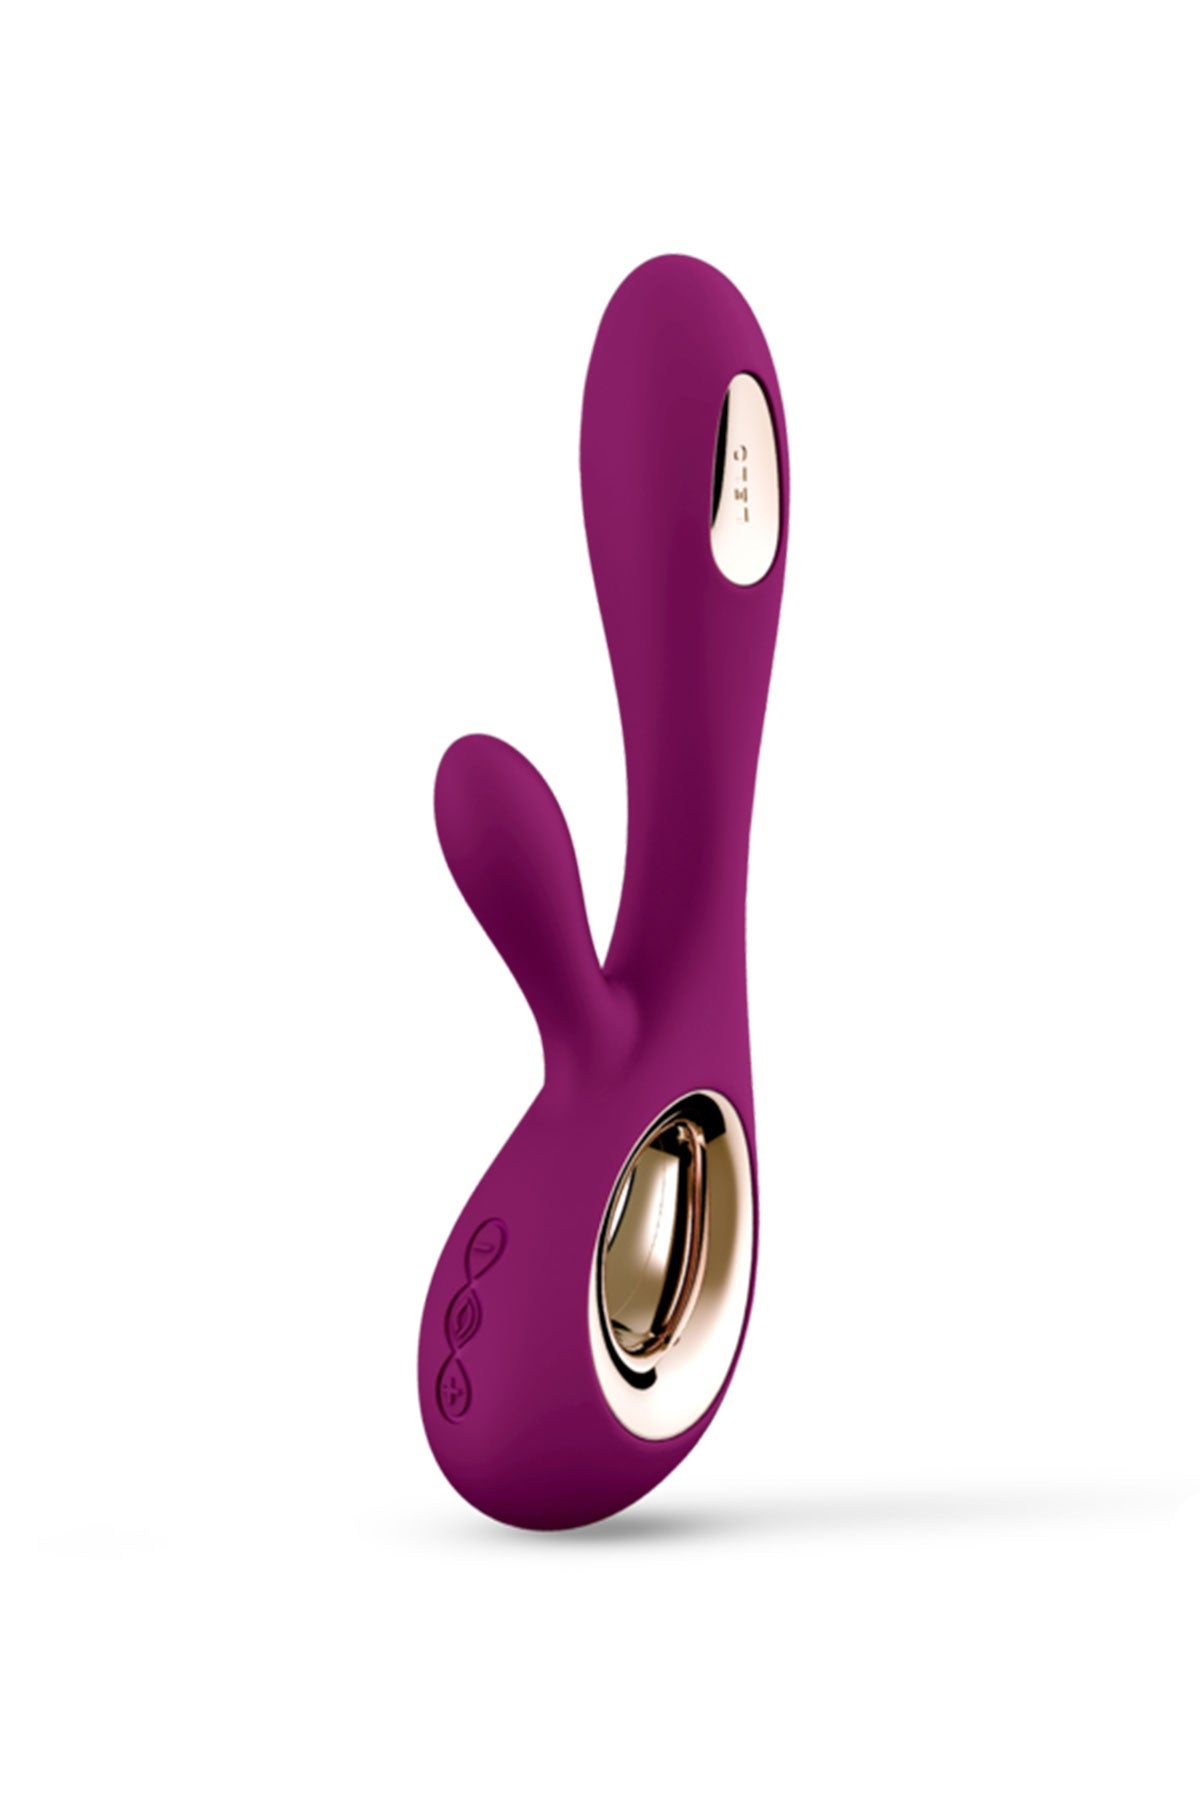 Soraya Wave Rabbit Vibrator by LELO 